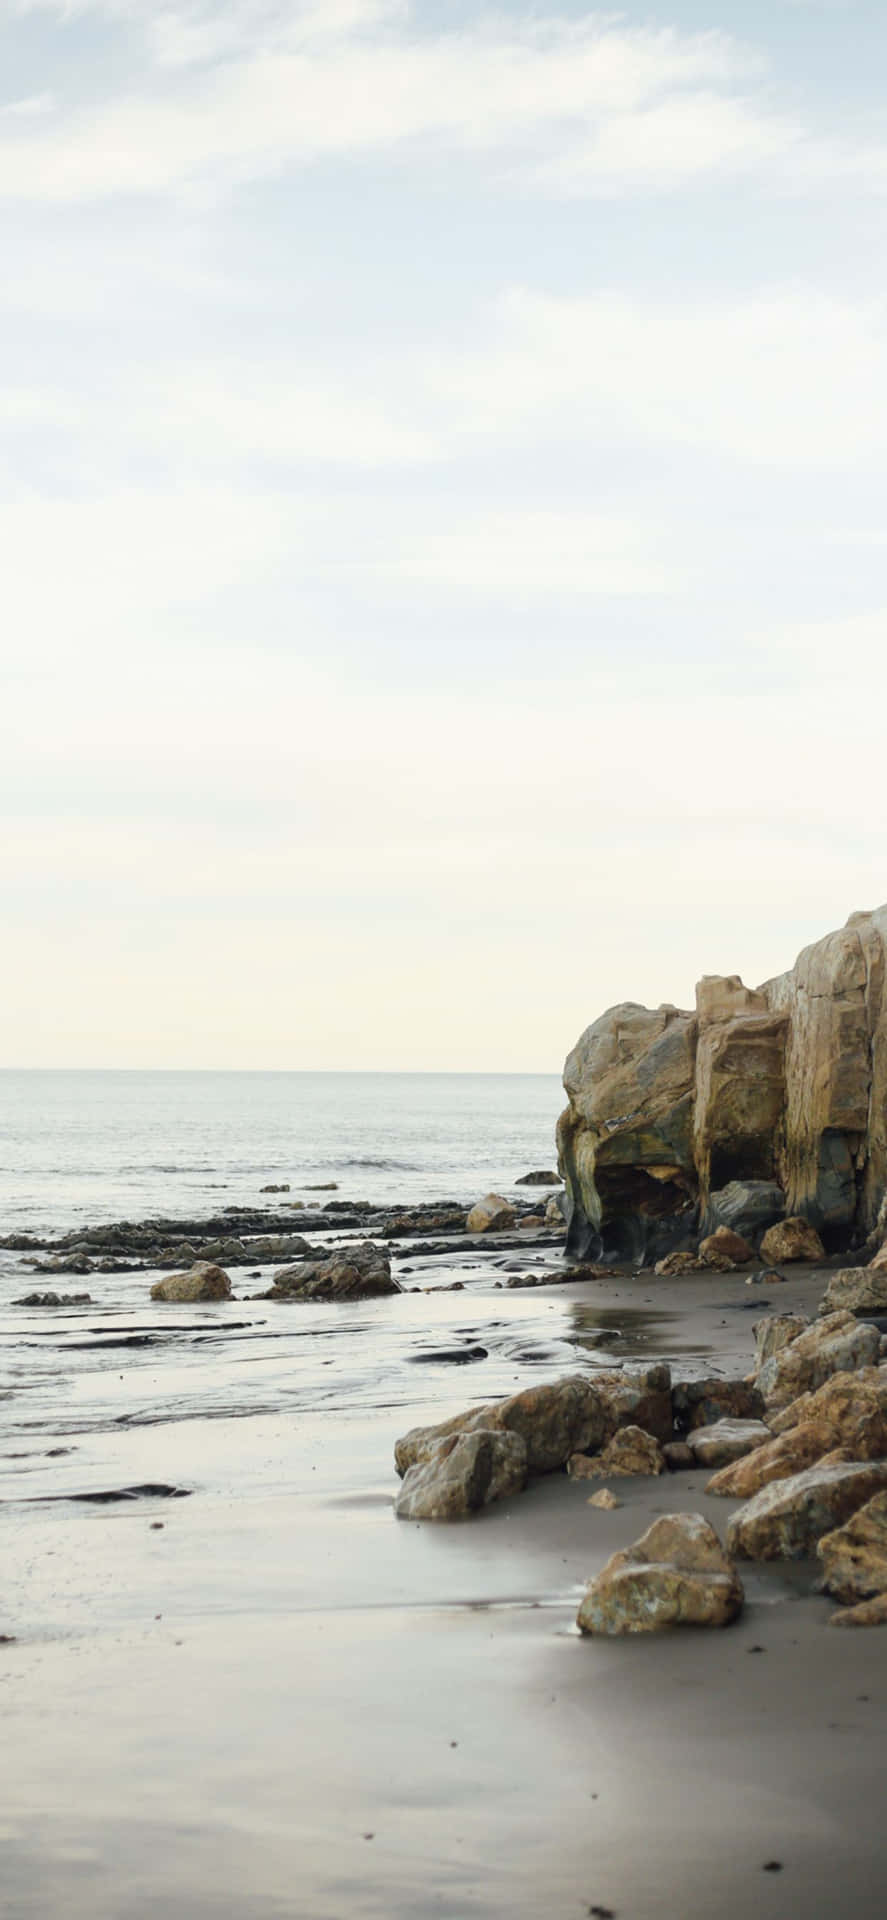 Iphone Xs Max Malibu Rocks By The Beach Background